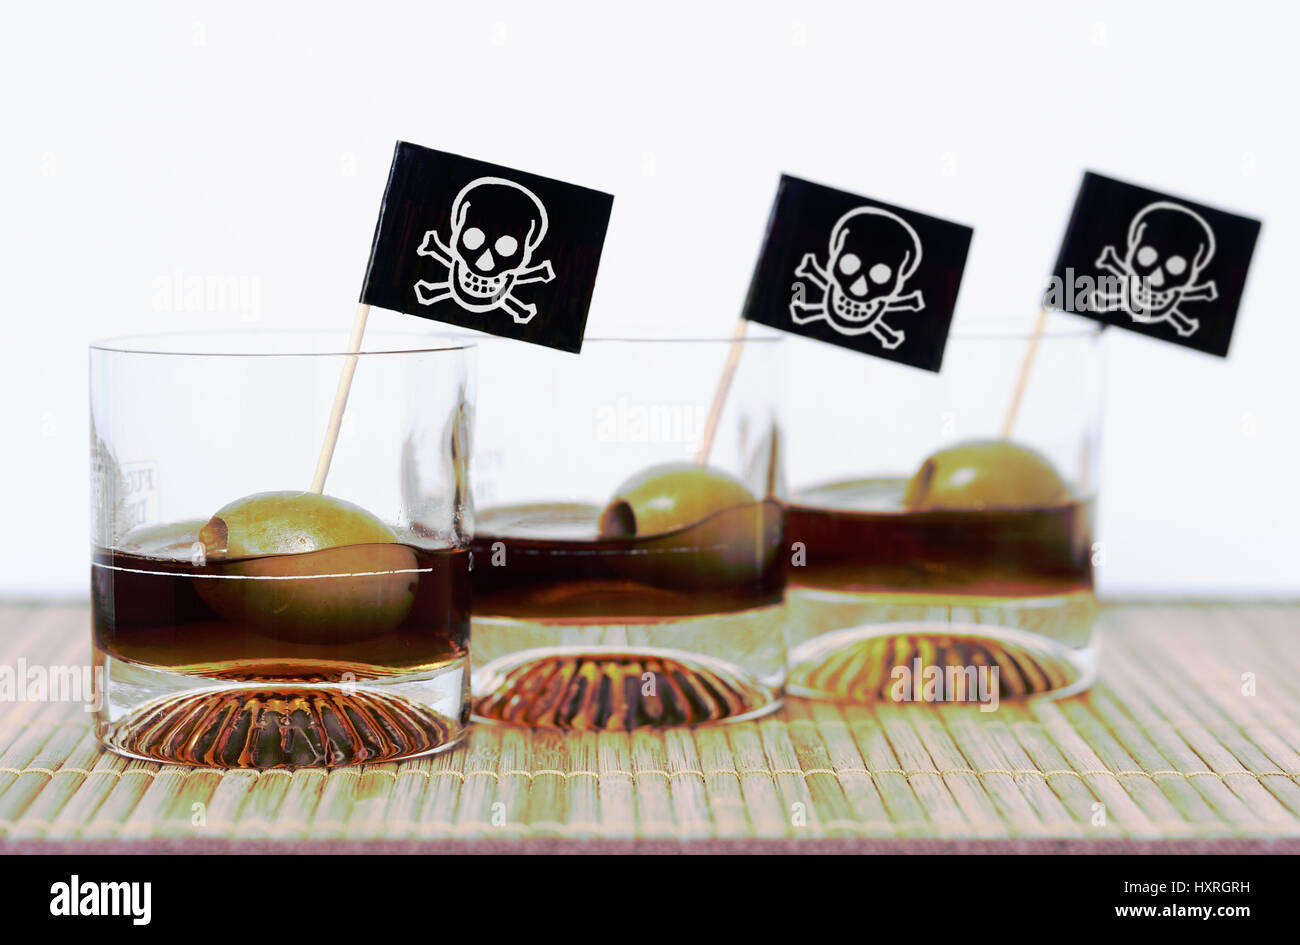 Three glasses with alcohol and death's-head flags, symbolic photo coma drinking, Drei Gläser mit Alkohol und Totenkopf-Fahnen, Symbolfoto Komasaufen Stock Photo